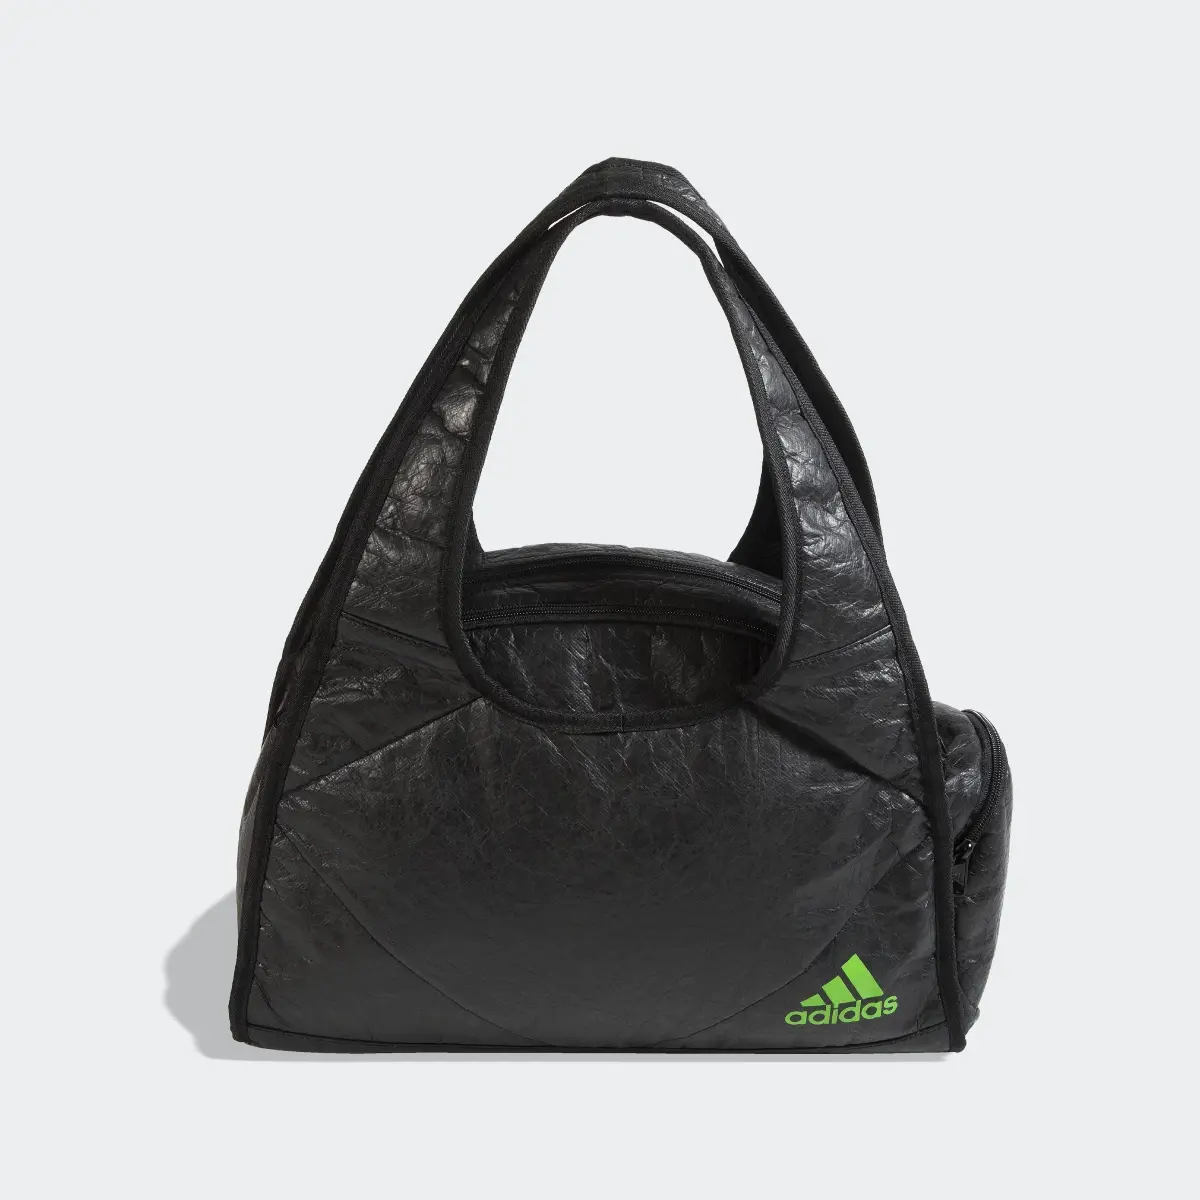 Adidas Weekend Bag 2.0. 2